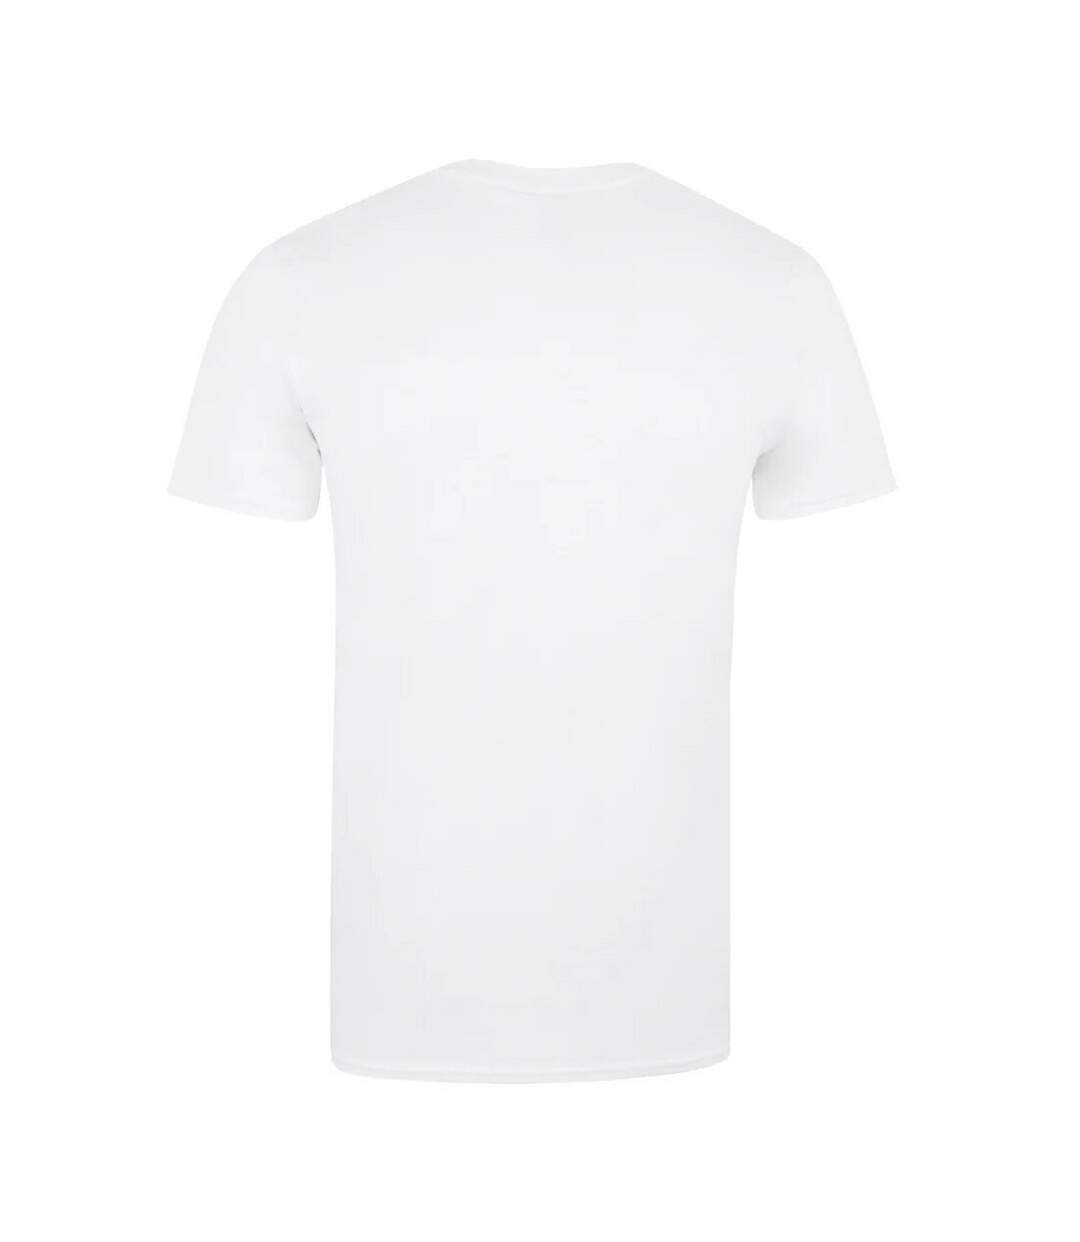 Marvel - T-shirt SNAP - Homme (Blanc / Jaune / Violet) - UTTV633